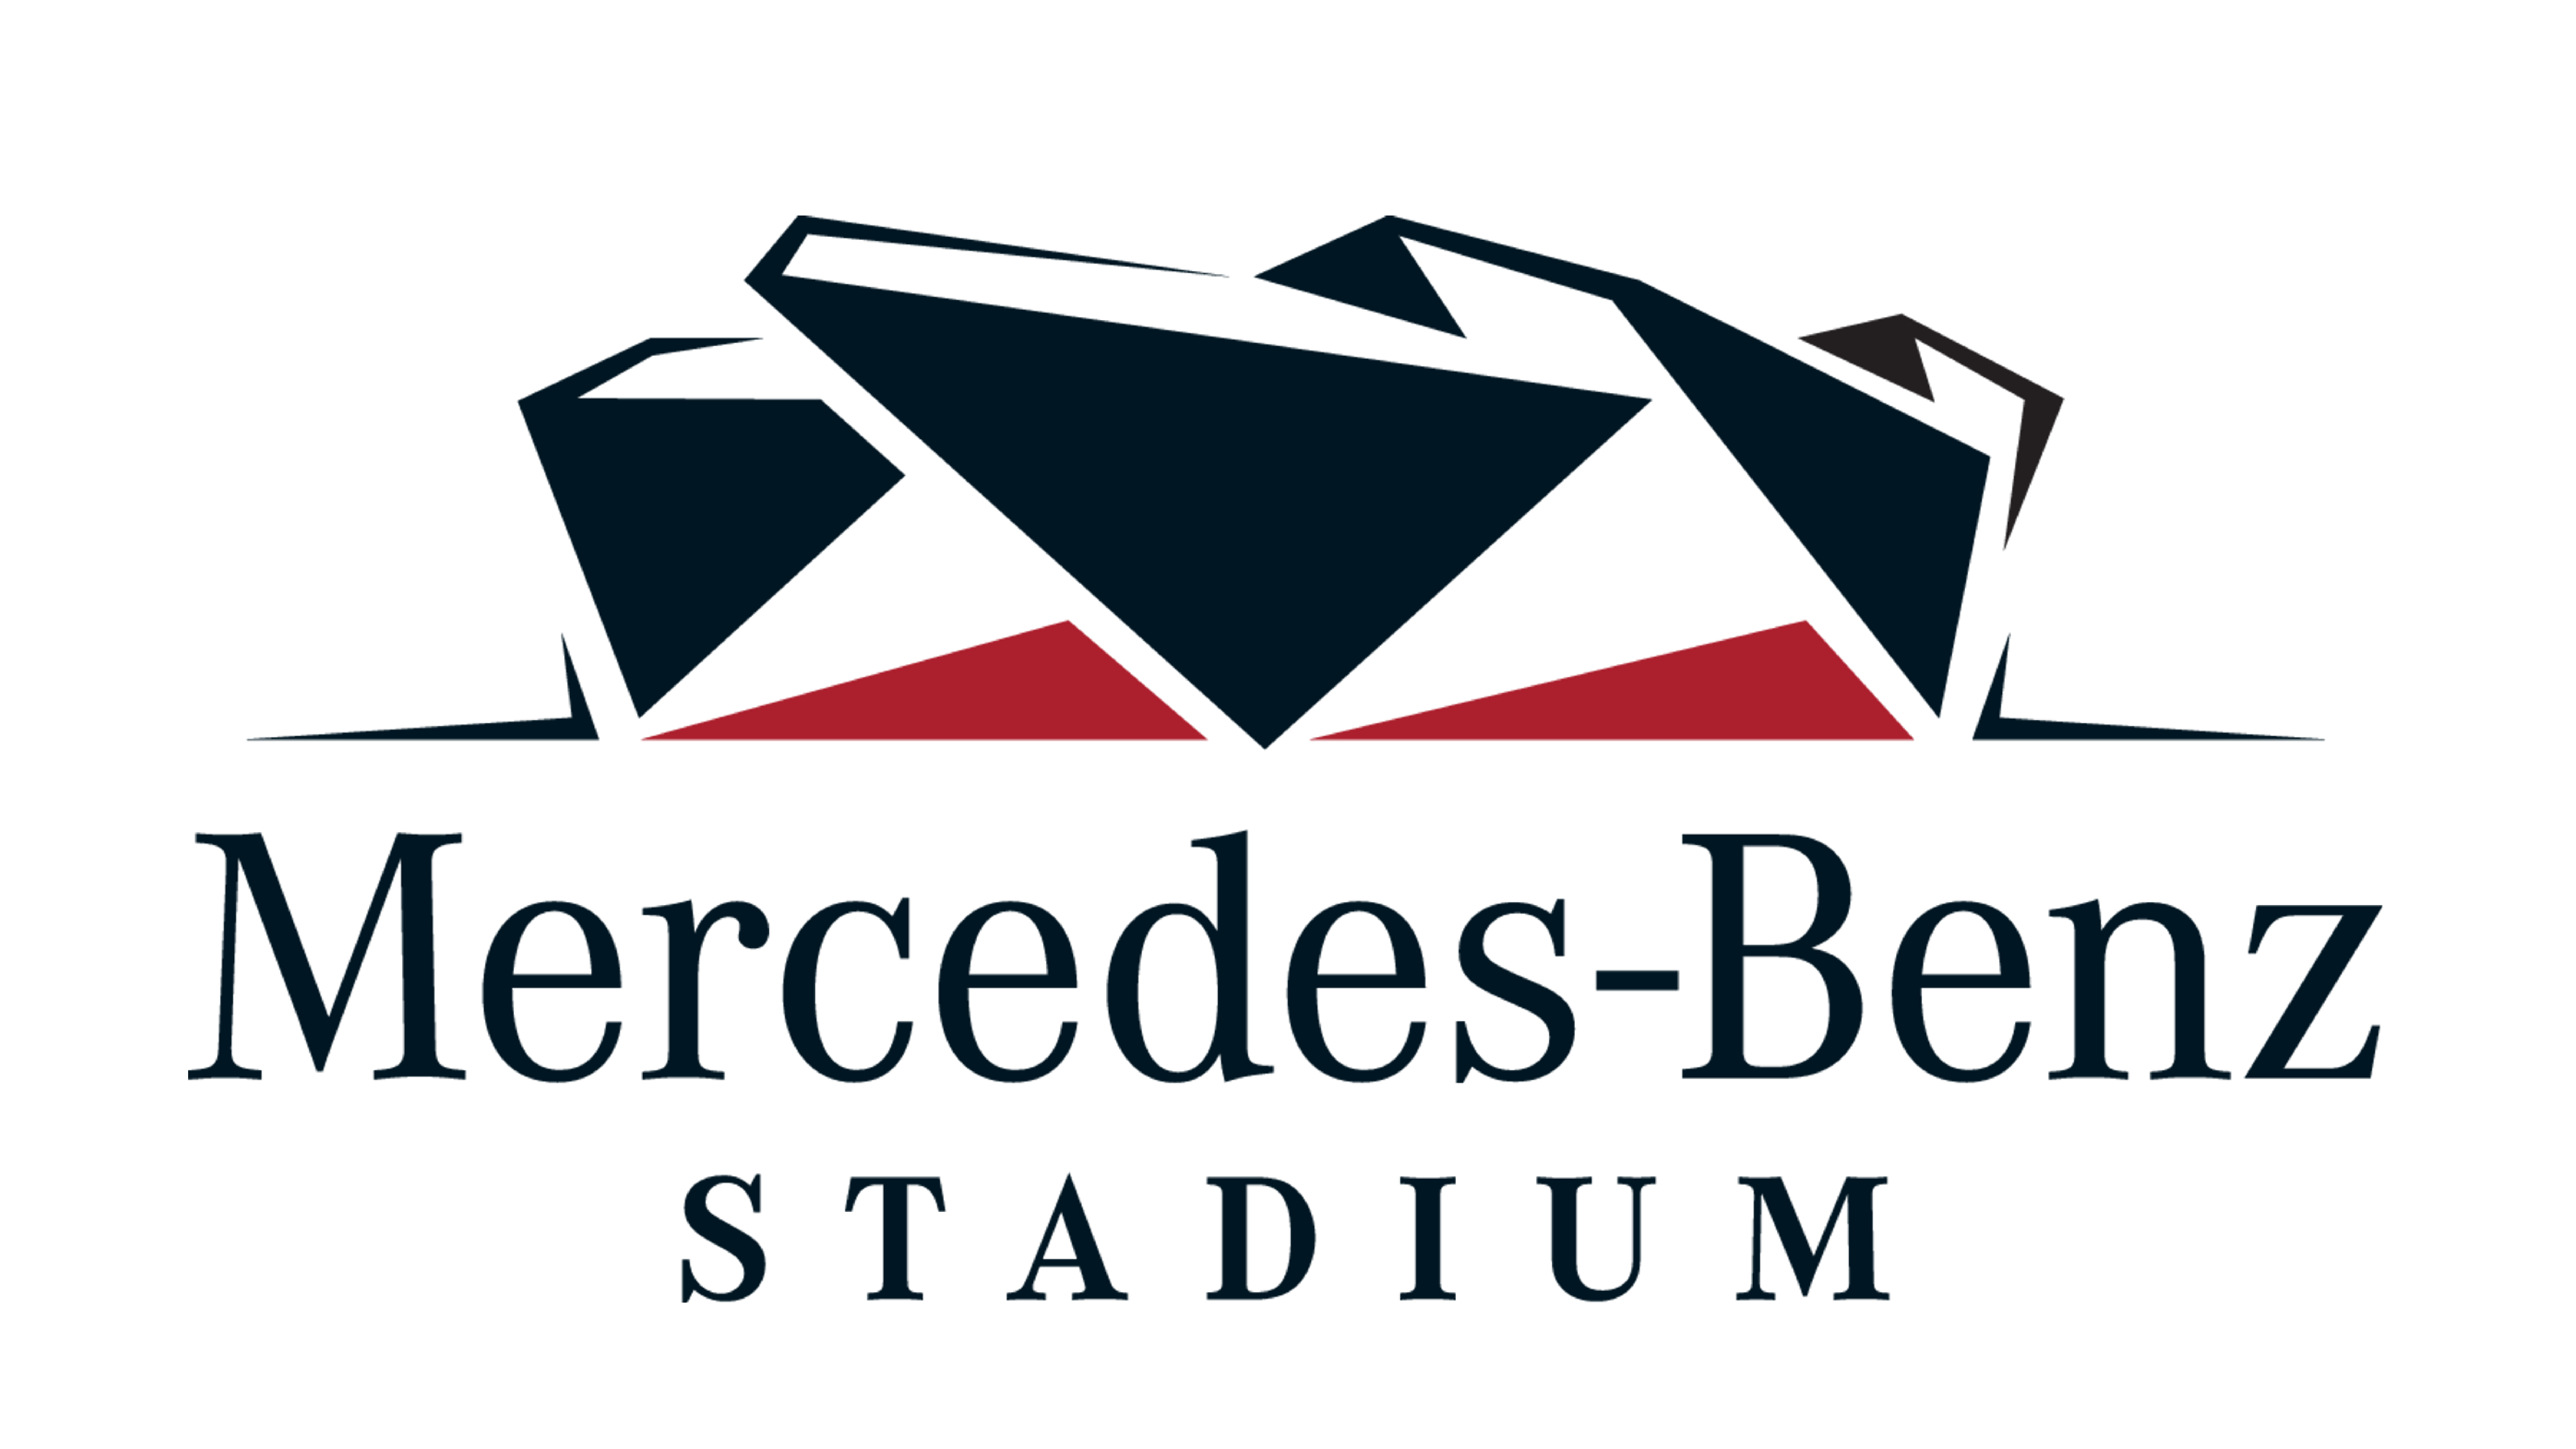 Mercedes-Benz stadium logo